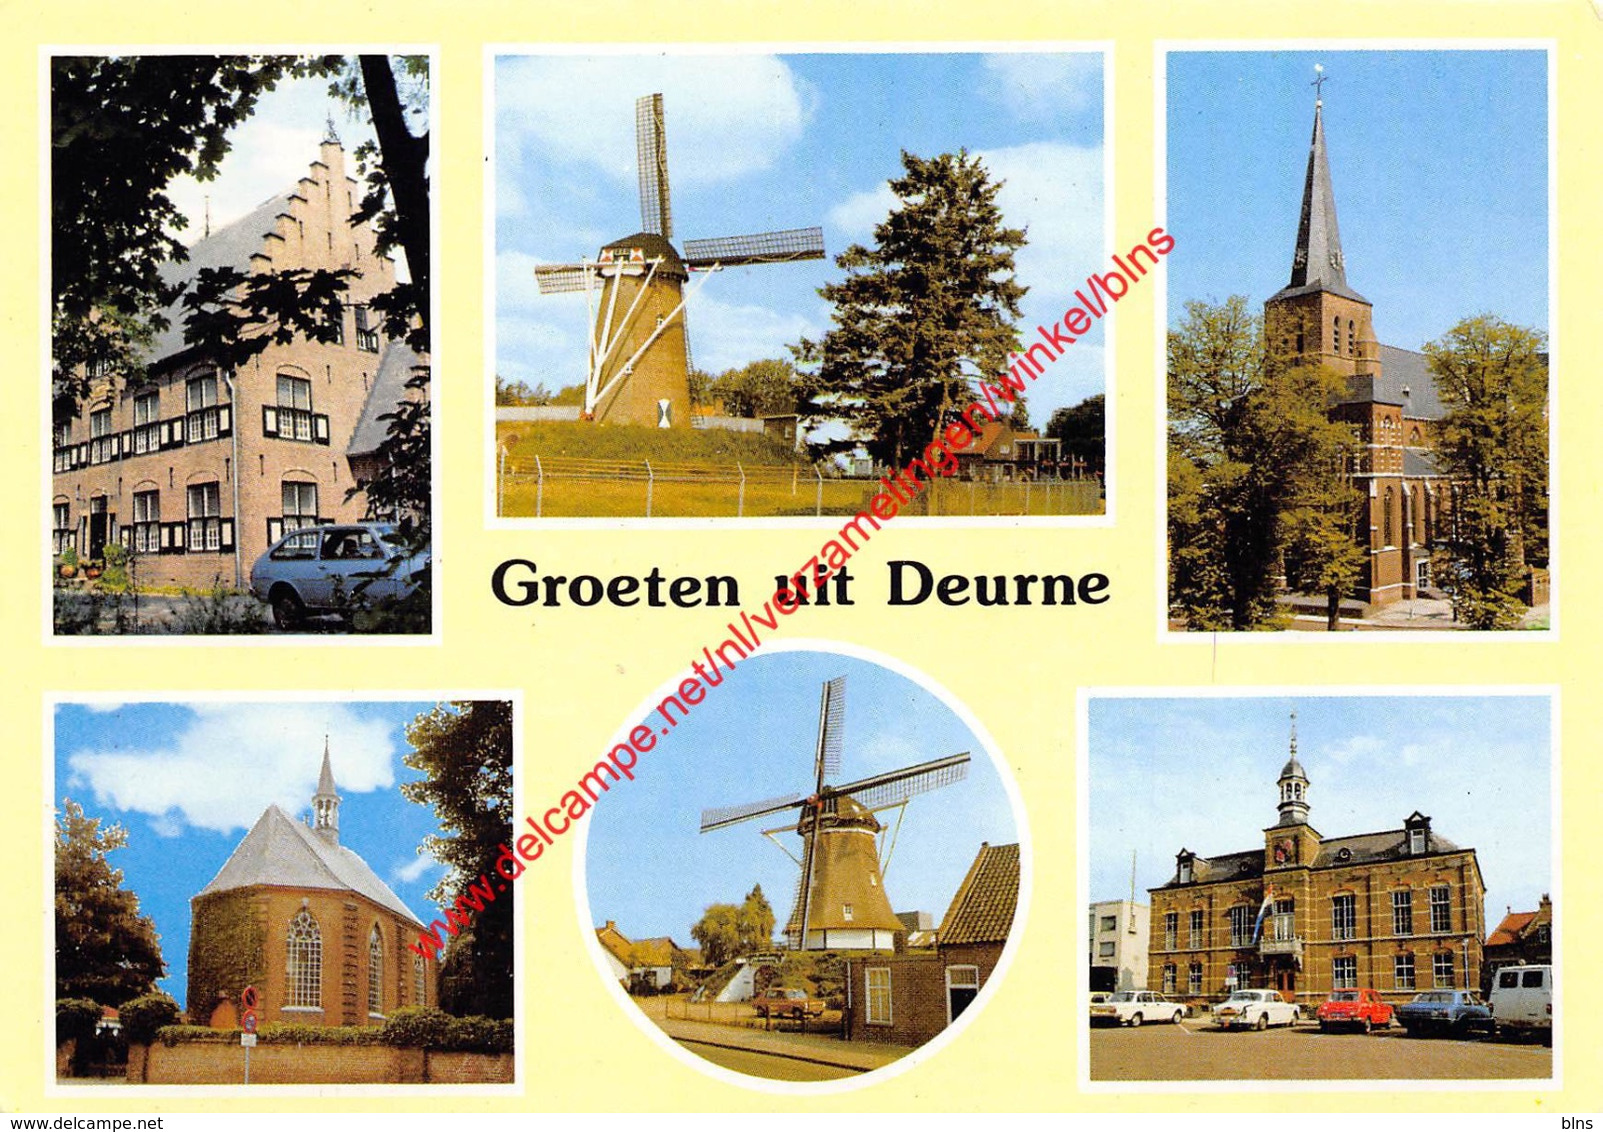 DEURNE - lot van 9 postkaarten